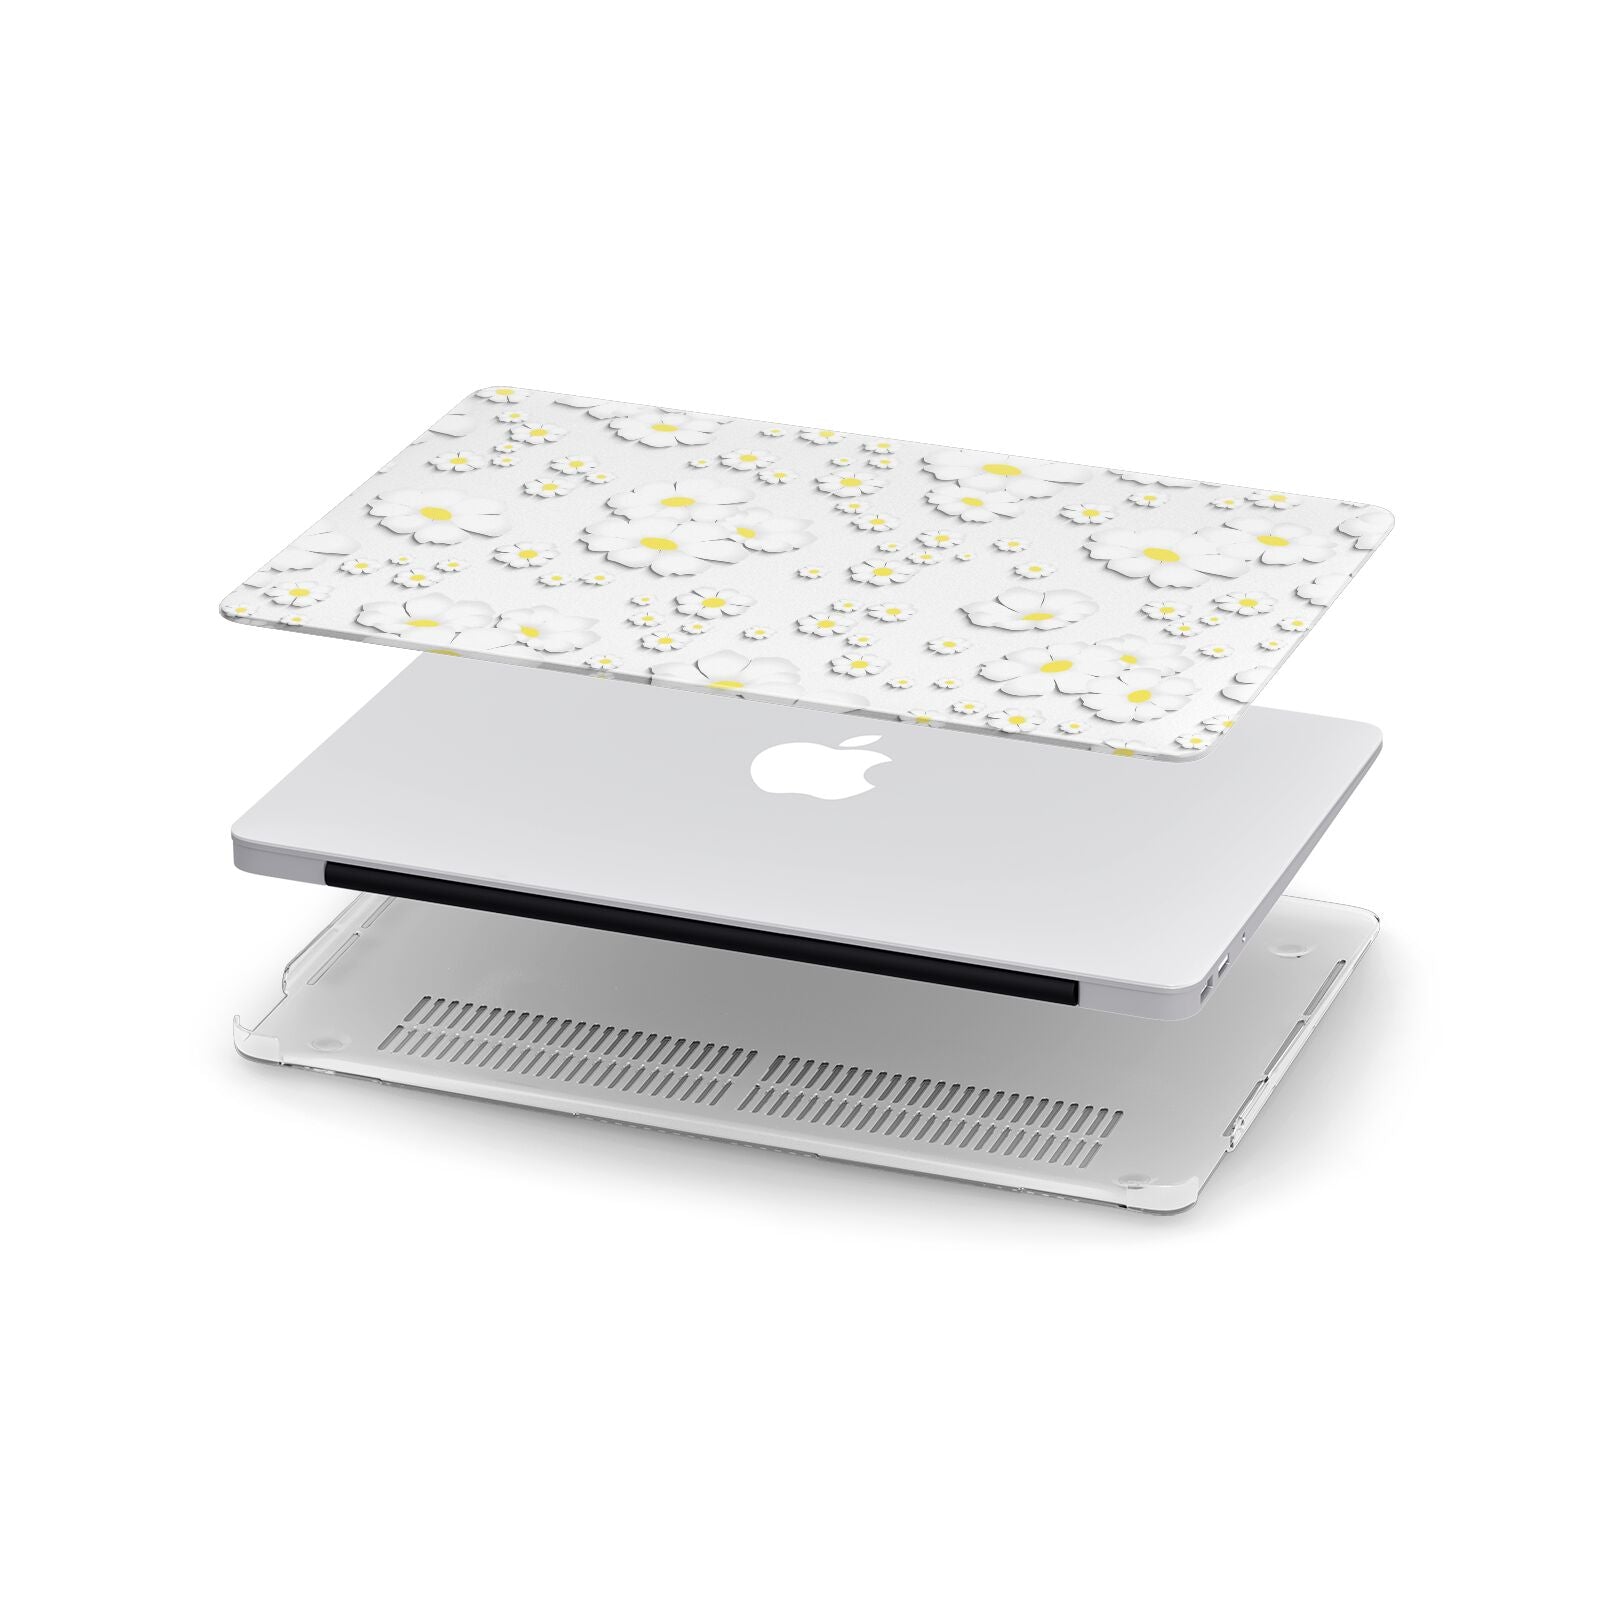 White Daisy Flower Apple MacBook Case in Detail